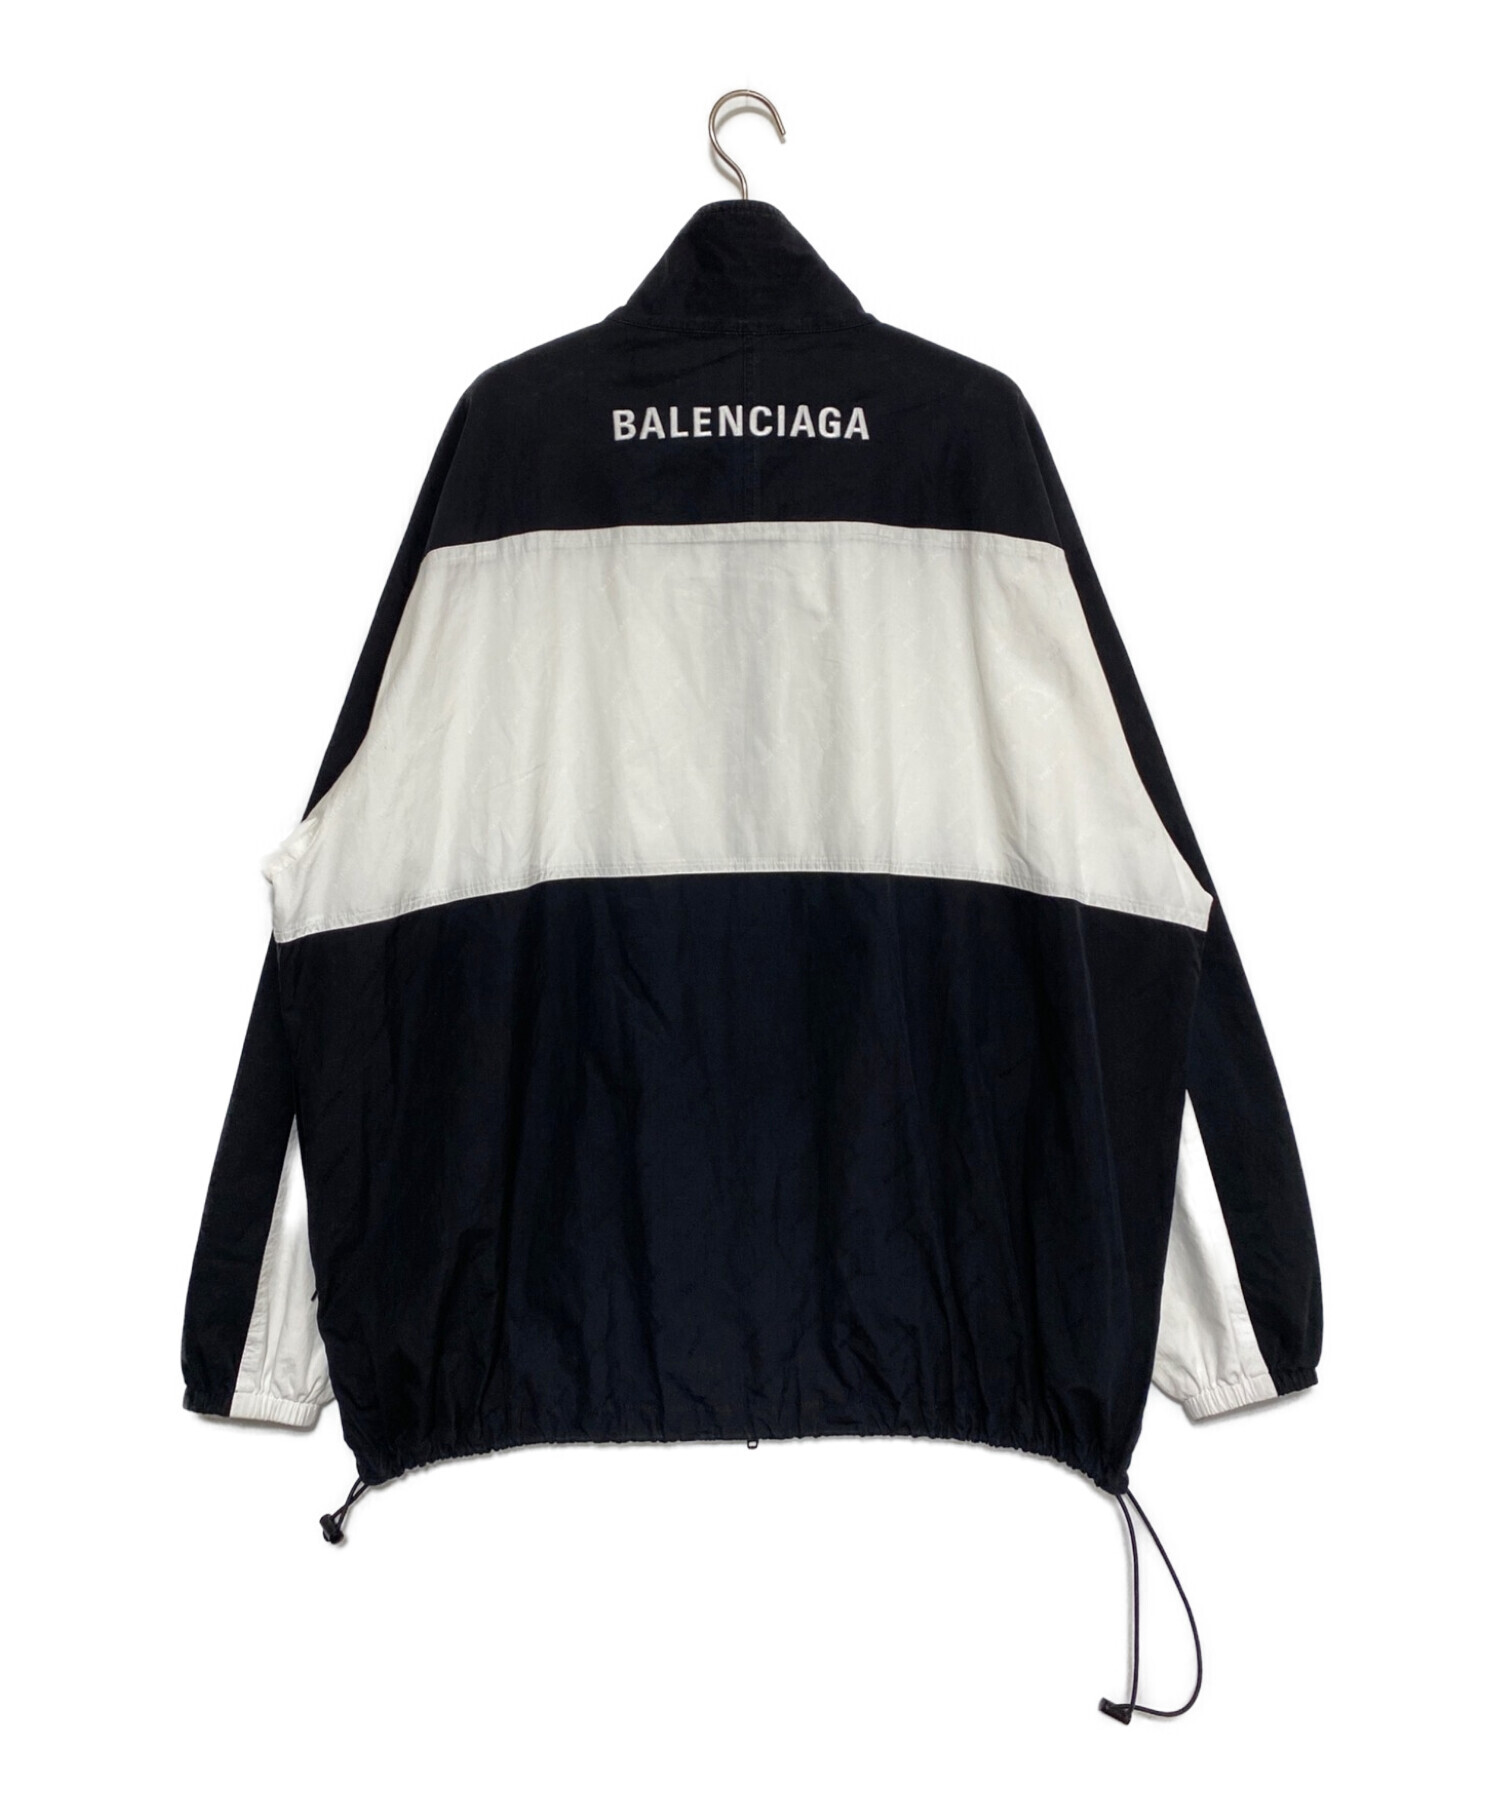 BALENCIAGA (バレンシアガ) ロゴプリントトラックジャケット ブラック×ホワイト サイズ:44